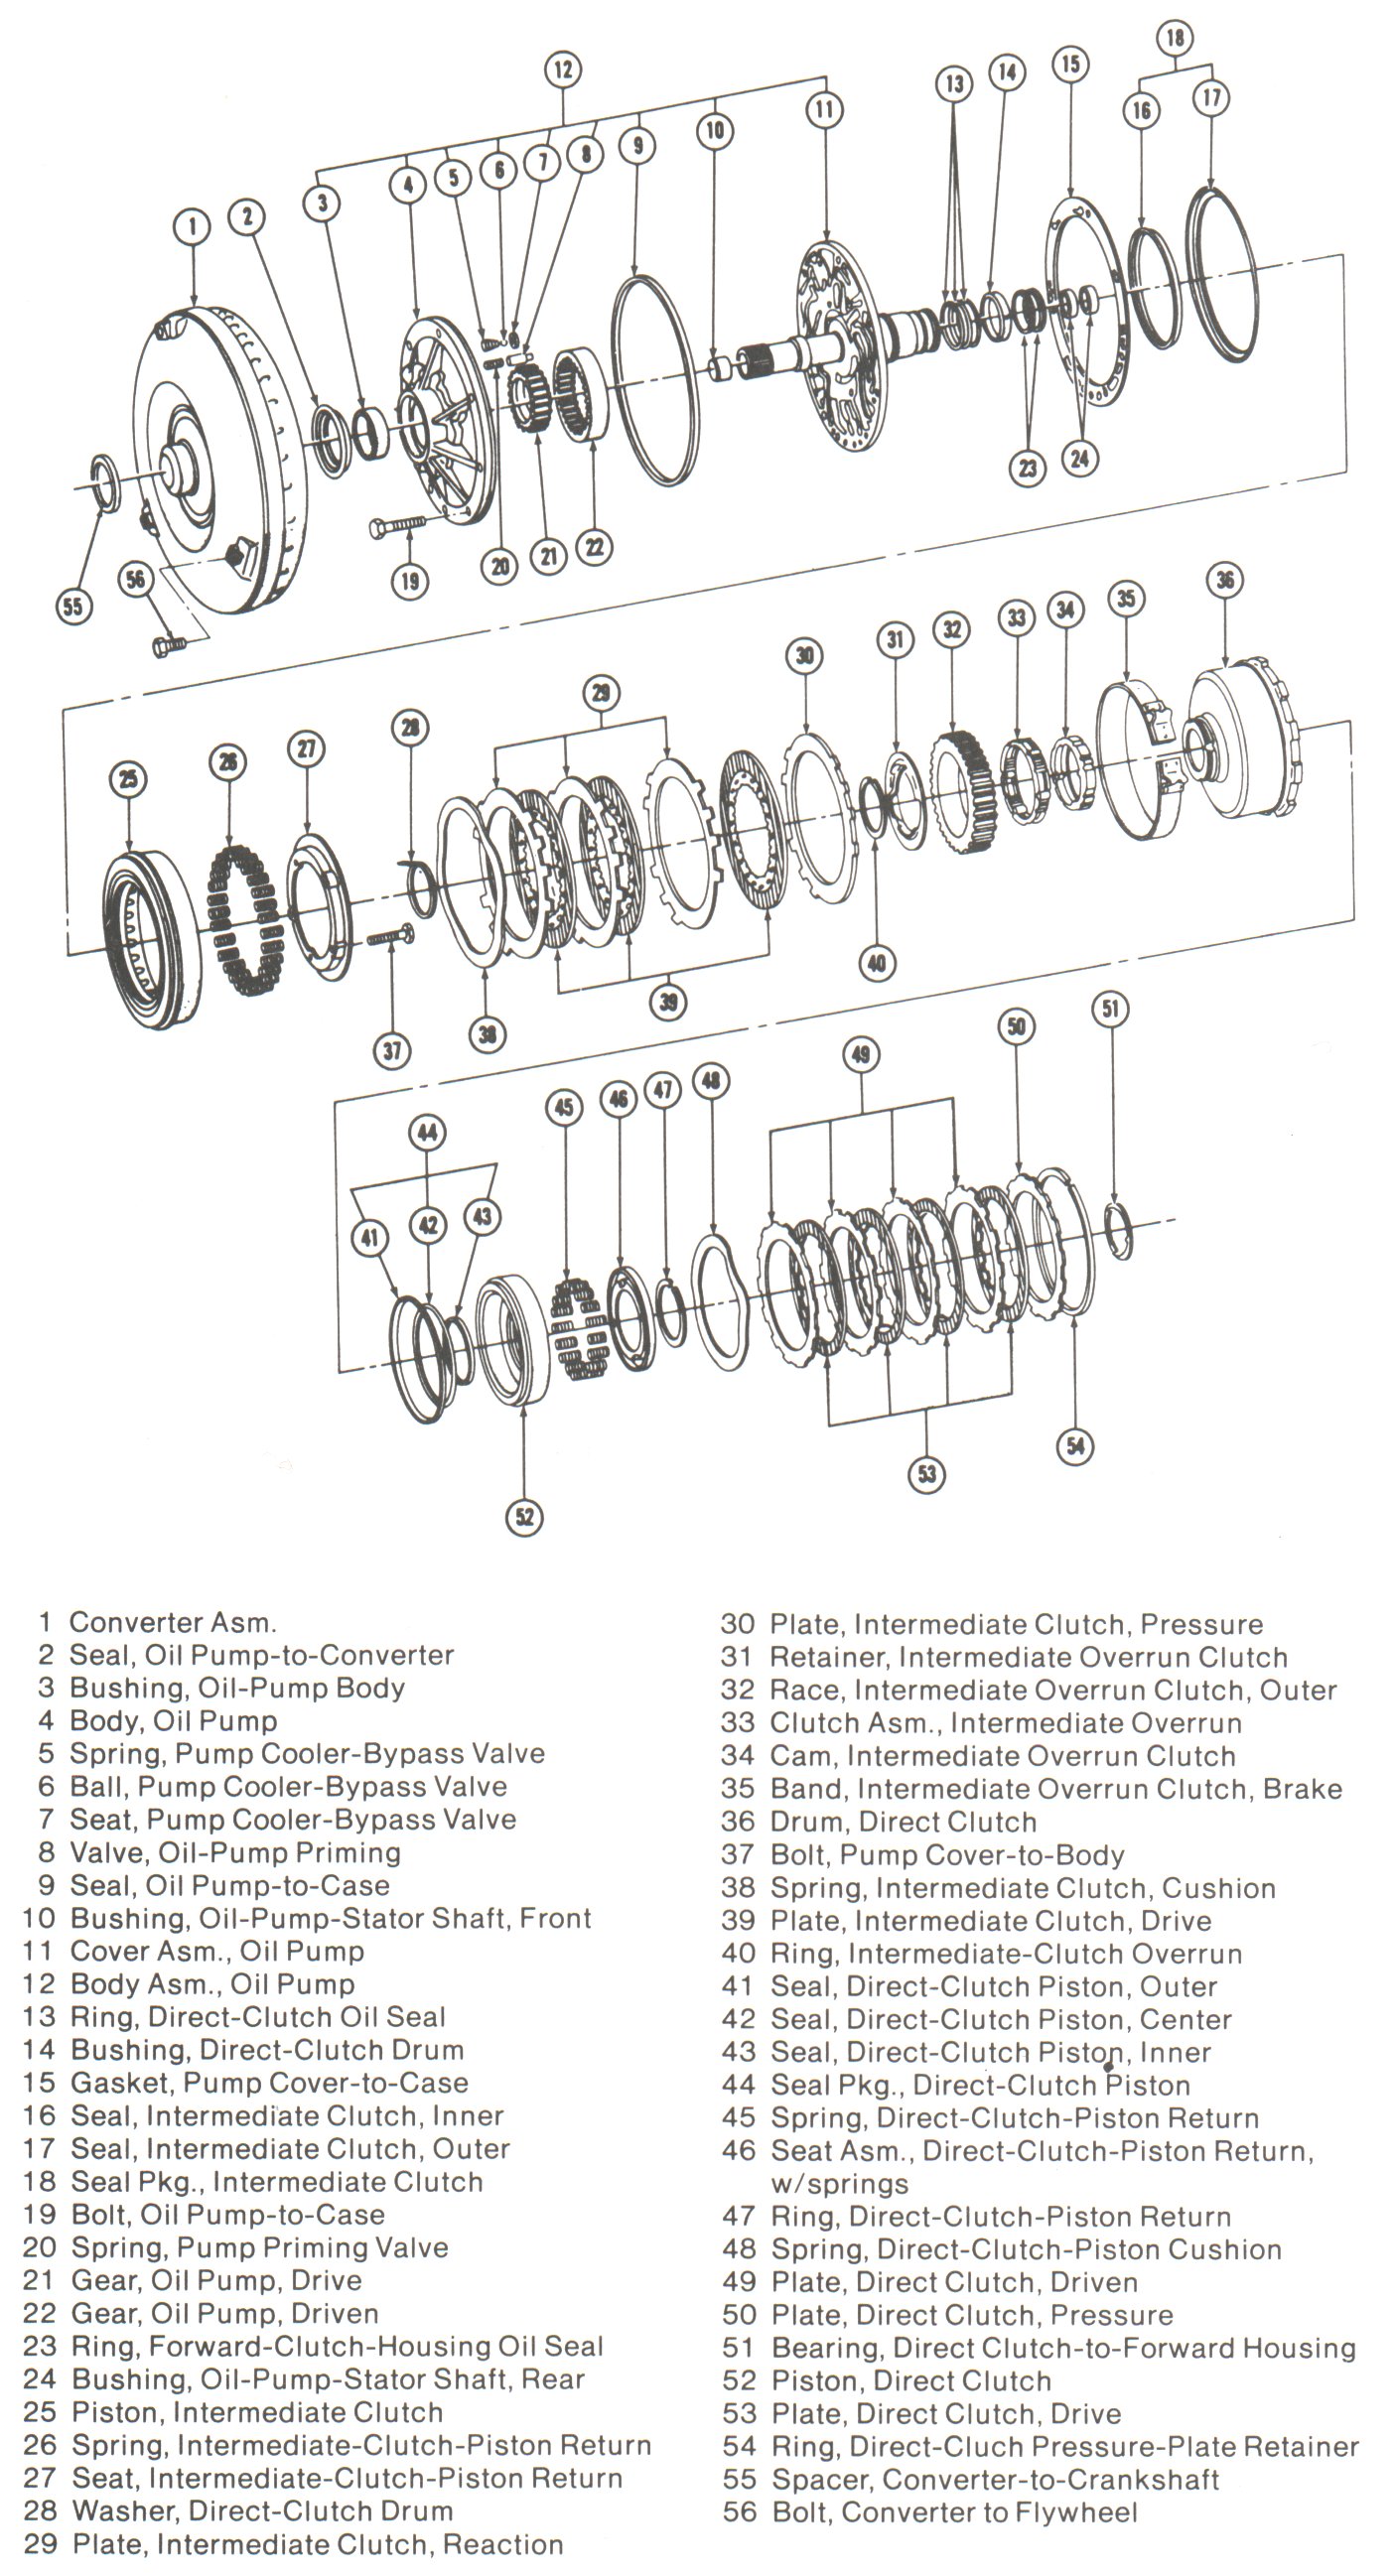 th400 transmission parts diagram